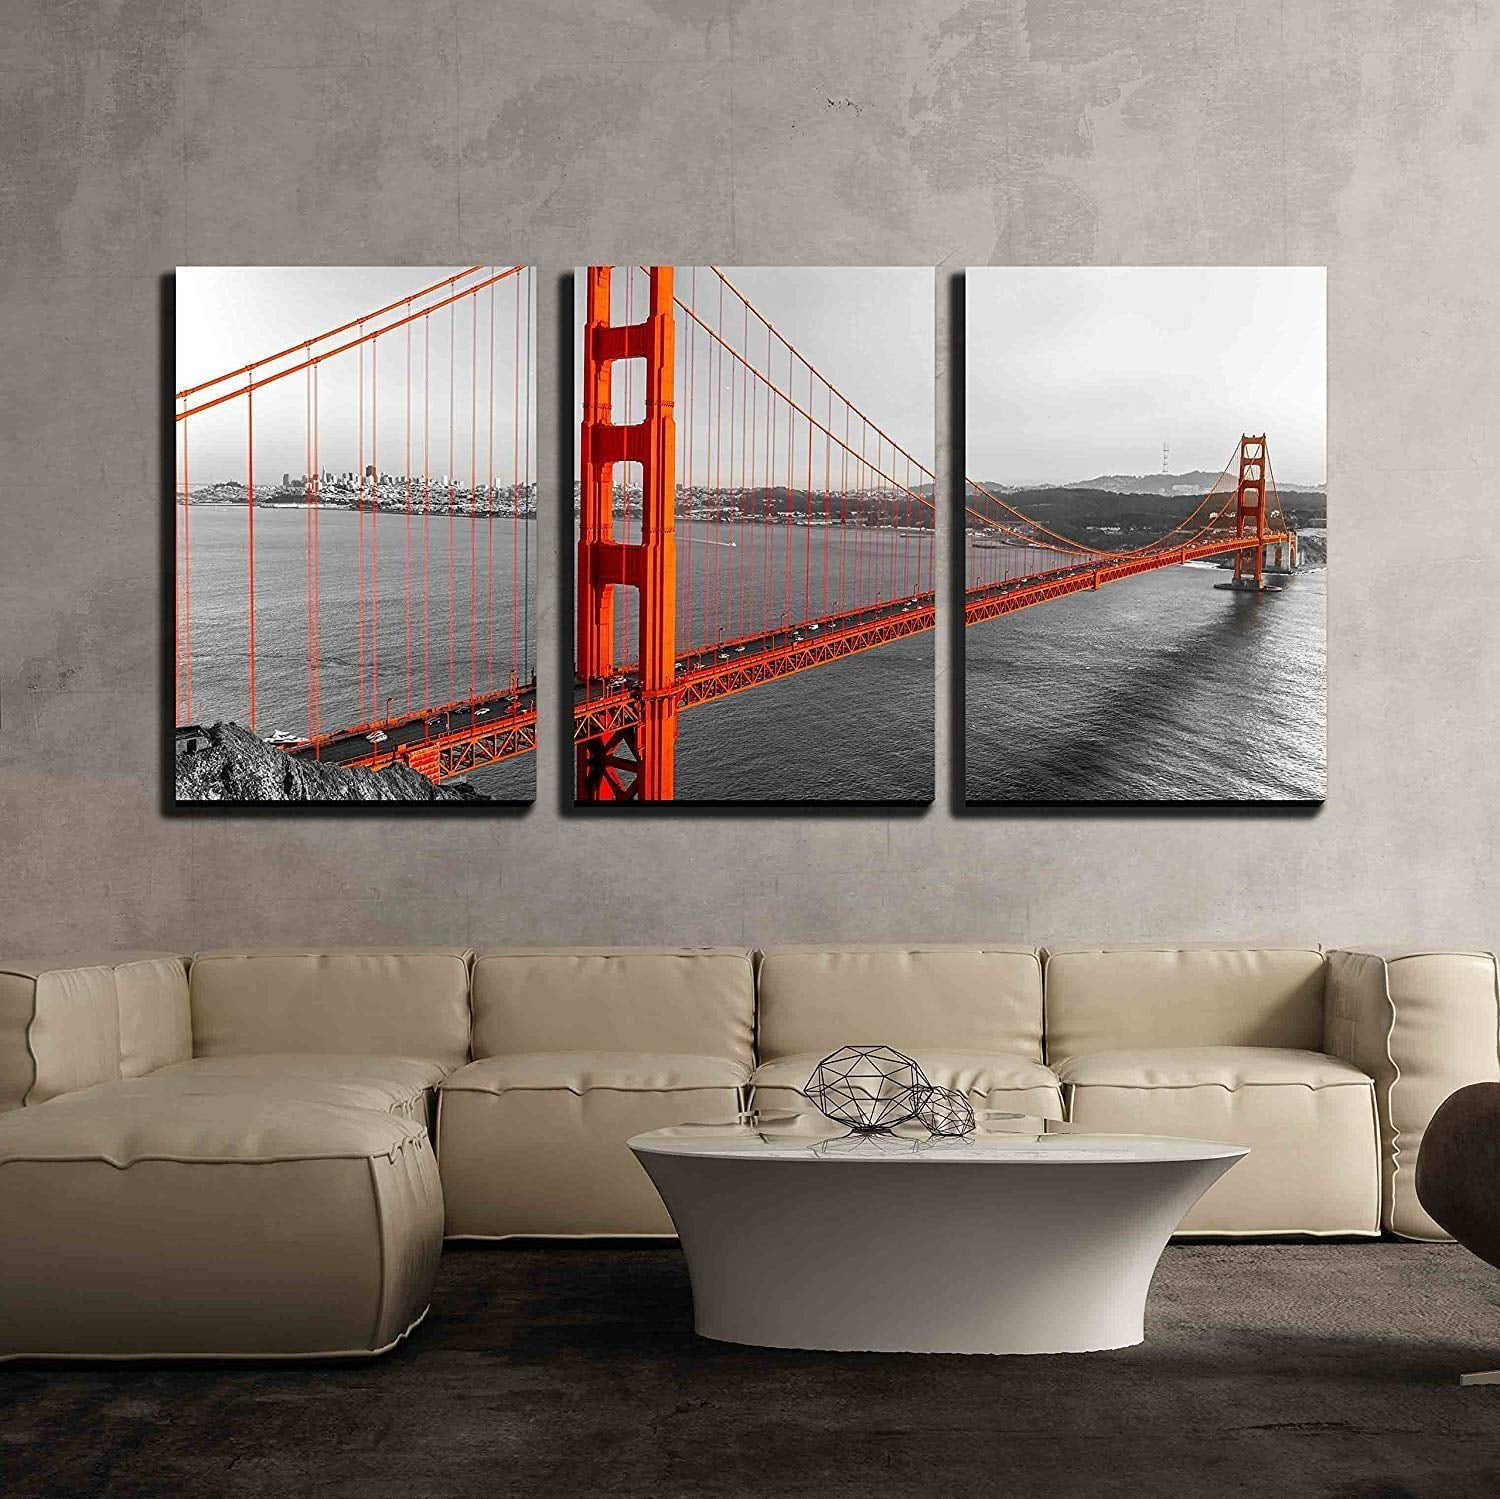 Wall26 3 Piece Canvas Wall Art - Golden Gate in San Francisco ...